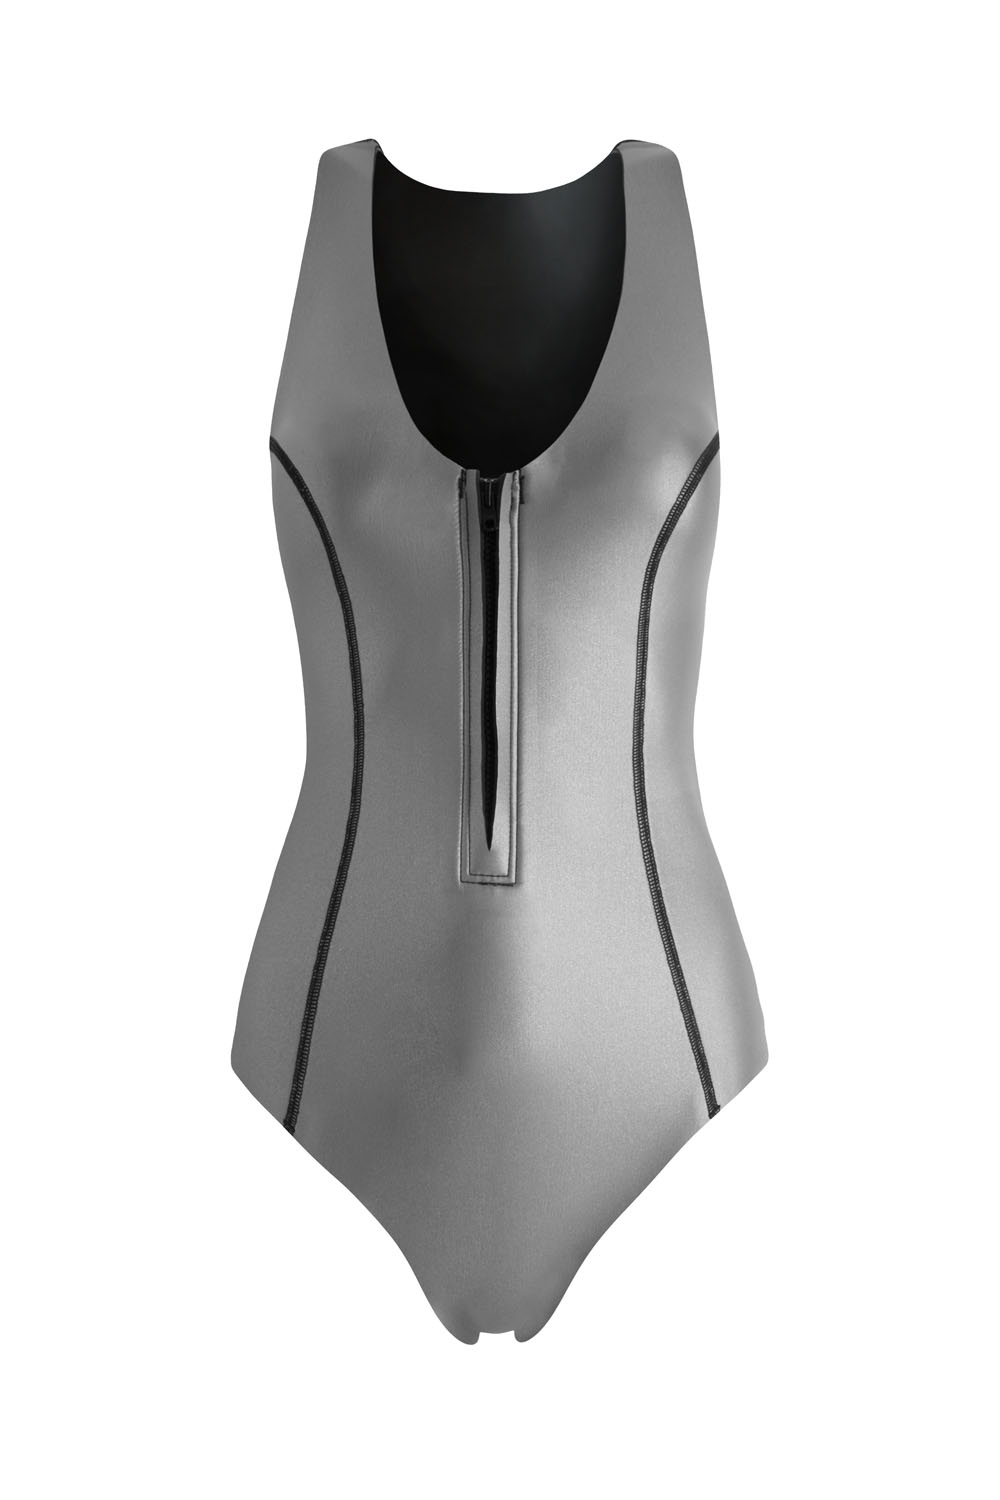 Neoprene wetsuit, petroleum-free ecoprene. Sylvia surf swimsuit in silver, by NOW_THEN, sustainable swimwear.